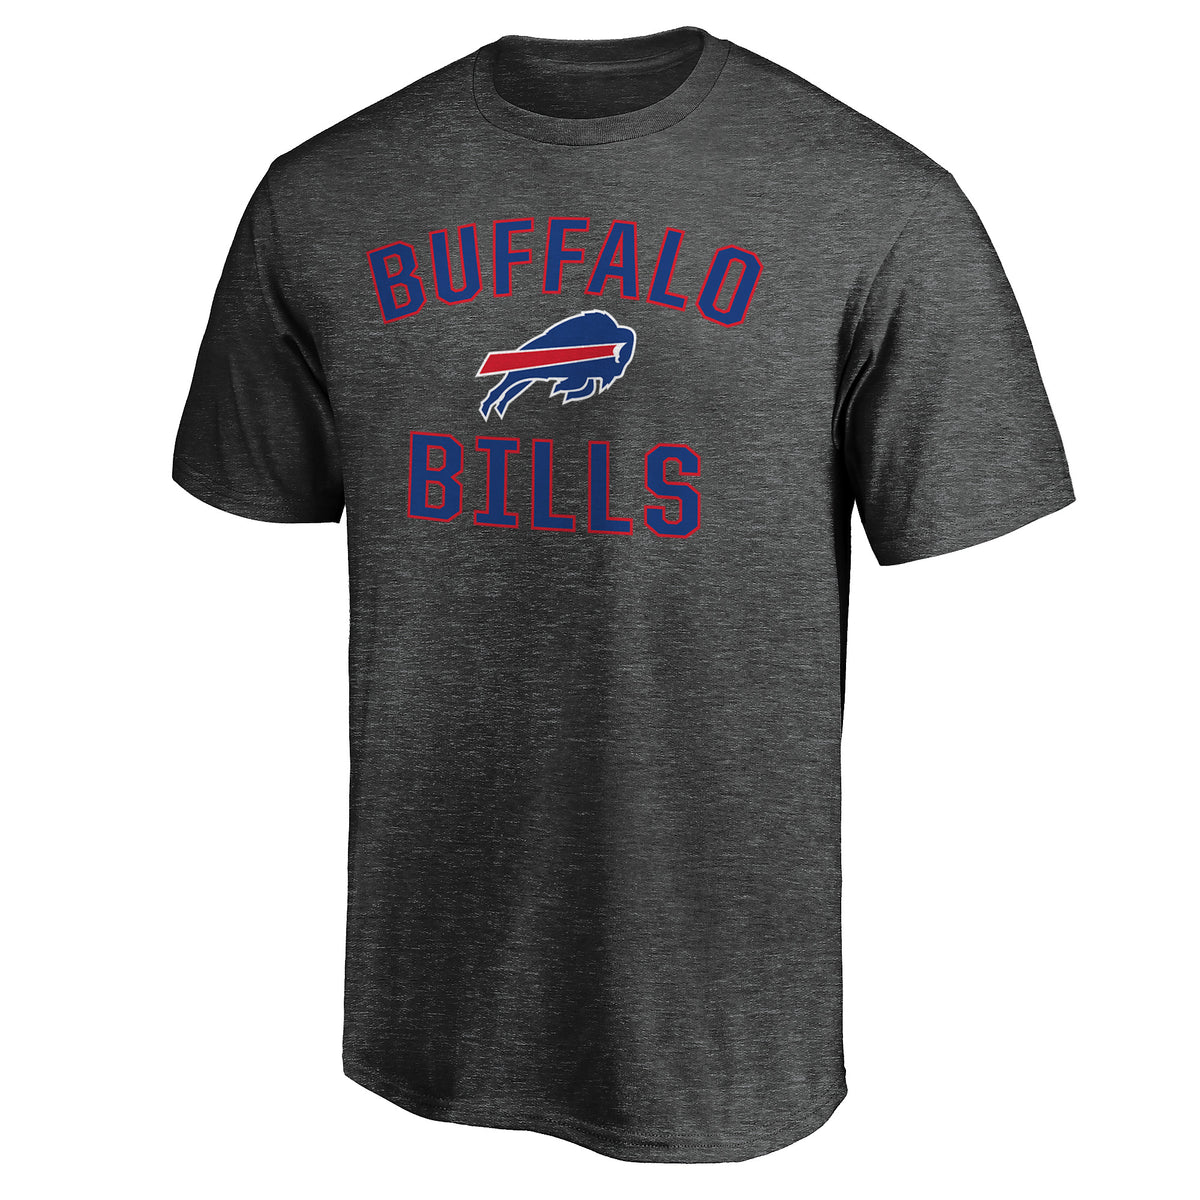 NFL Buffalo Bills Fanatics Victory Arch Tee